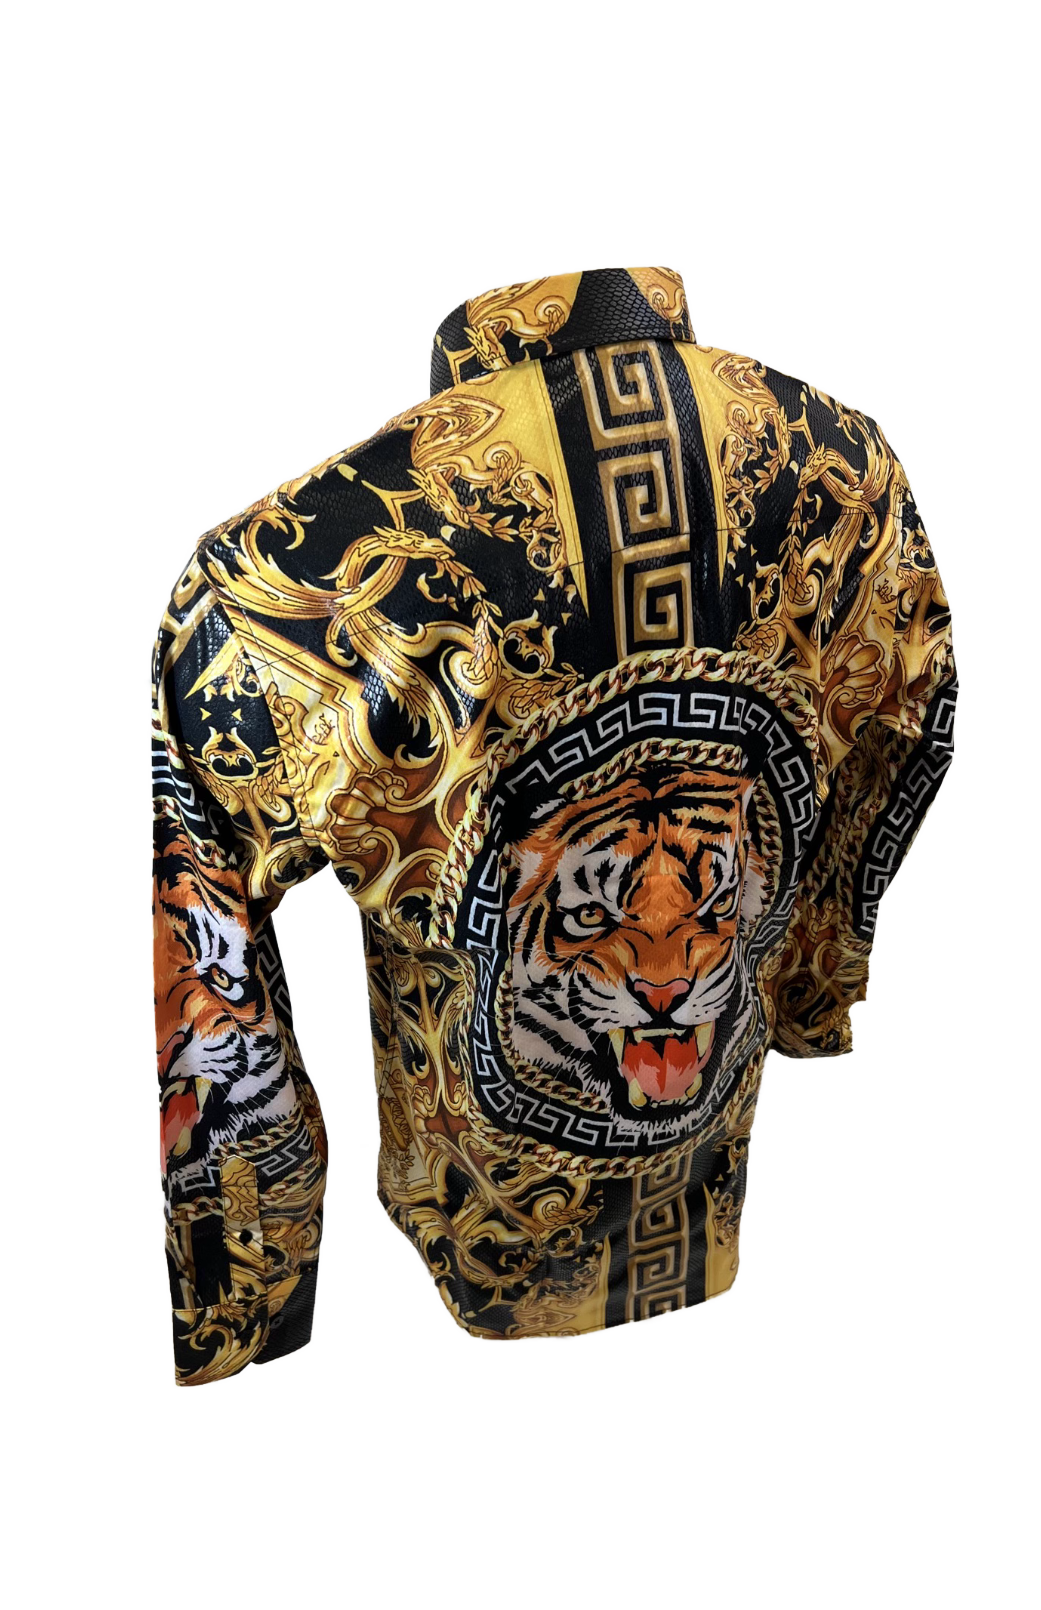 Men's Long Sleeve Button Down Dress Shirt Roar Tiger Black Gold Colorful